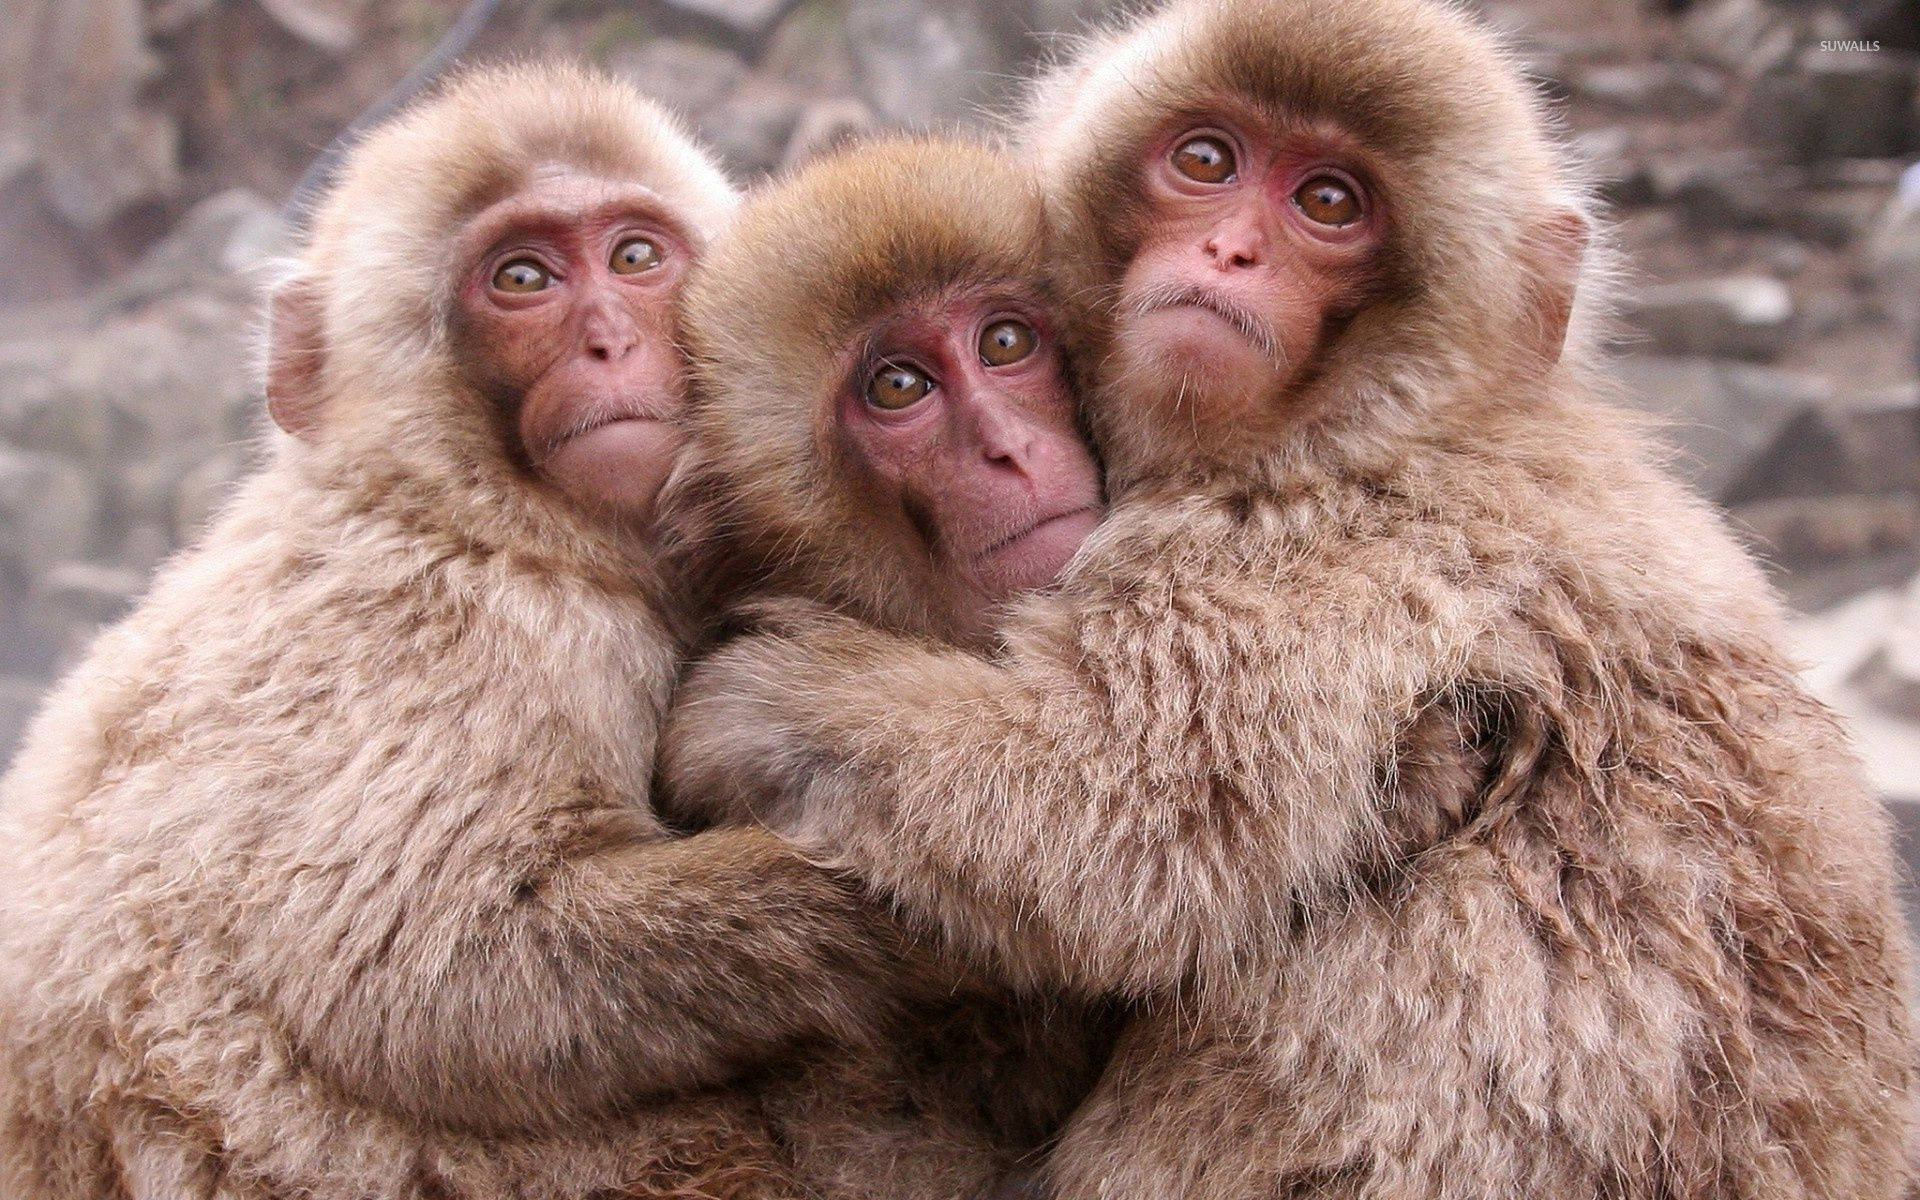 Three Adorable Monkeys Posing Together Background